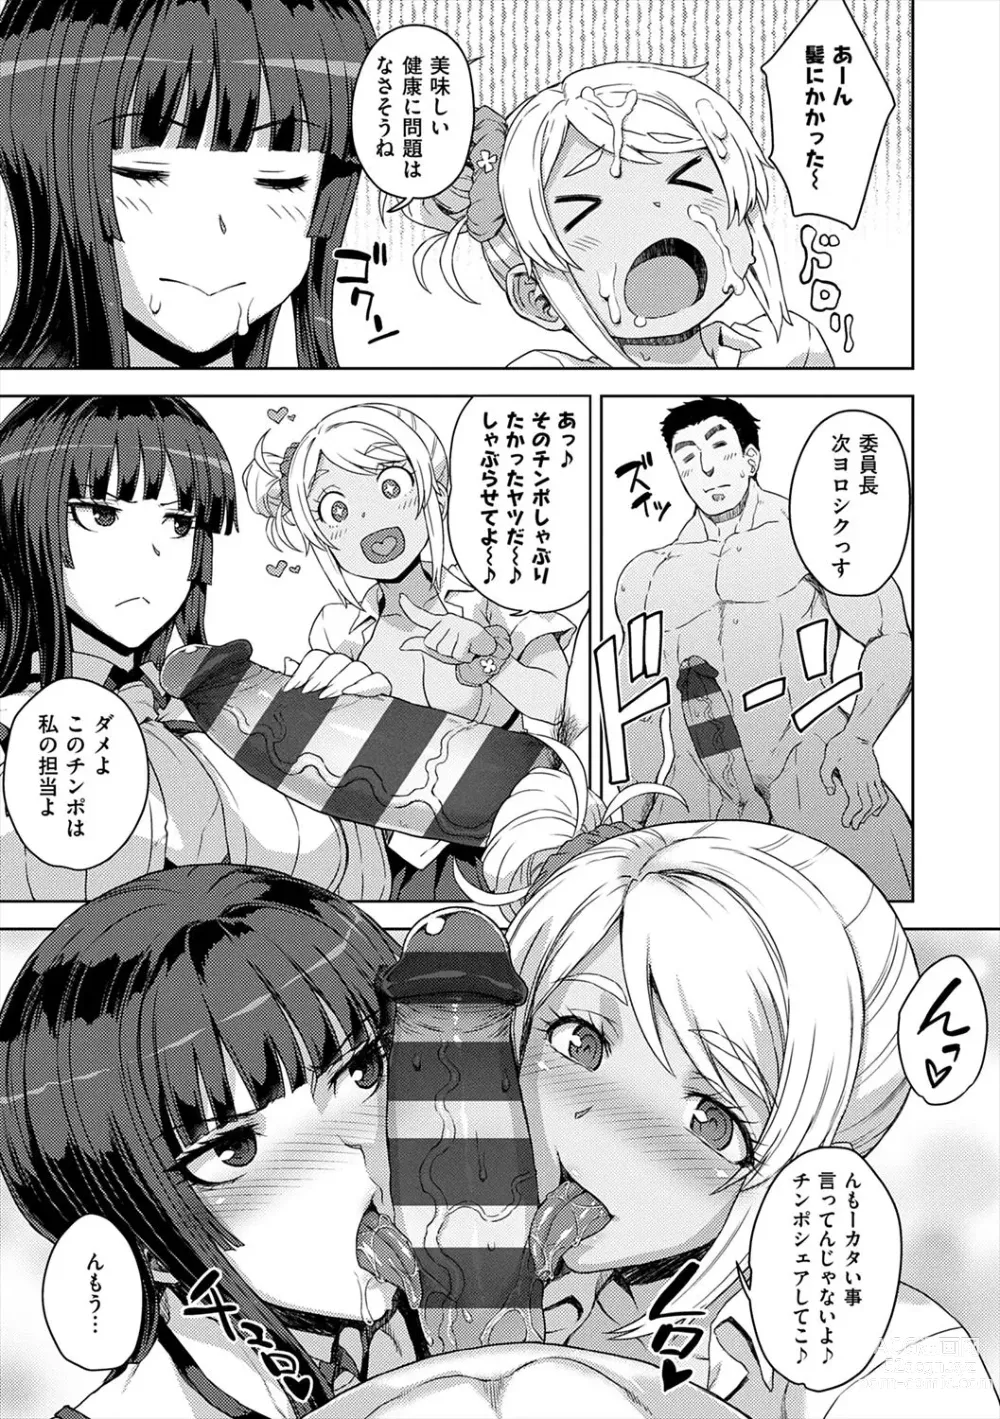 Page 17 of manga Marble Girls